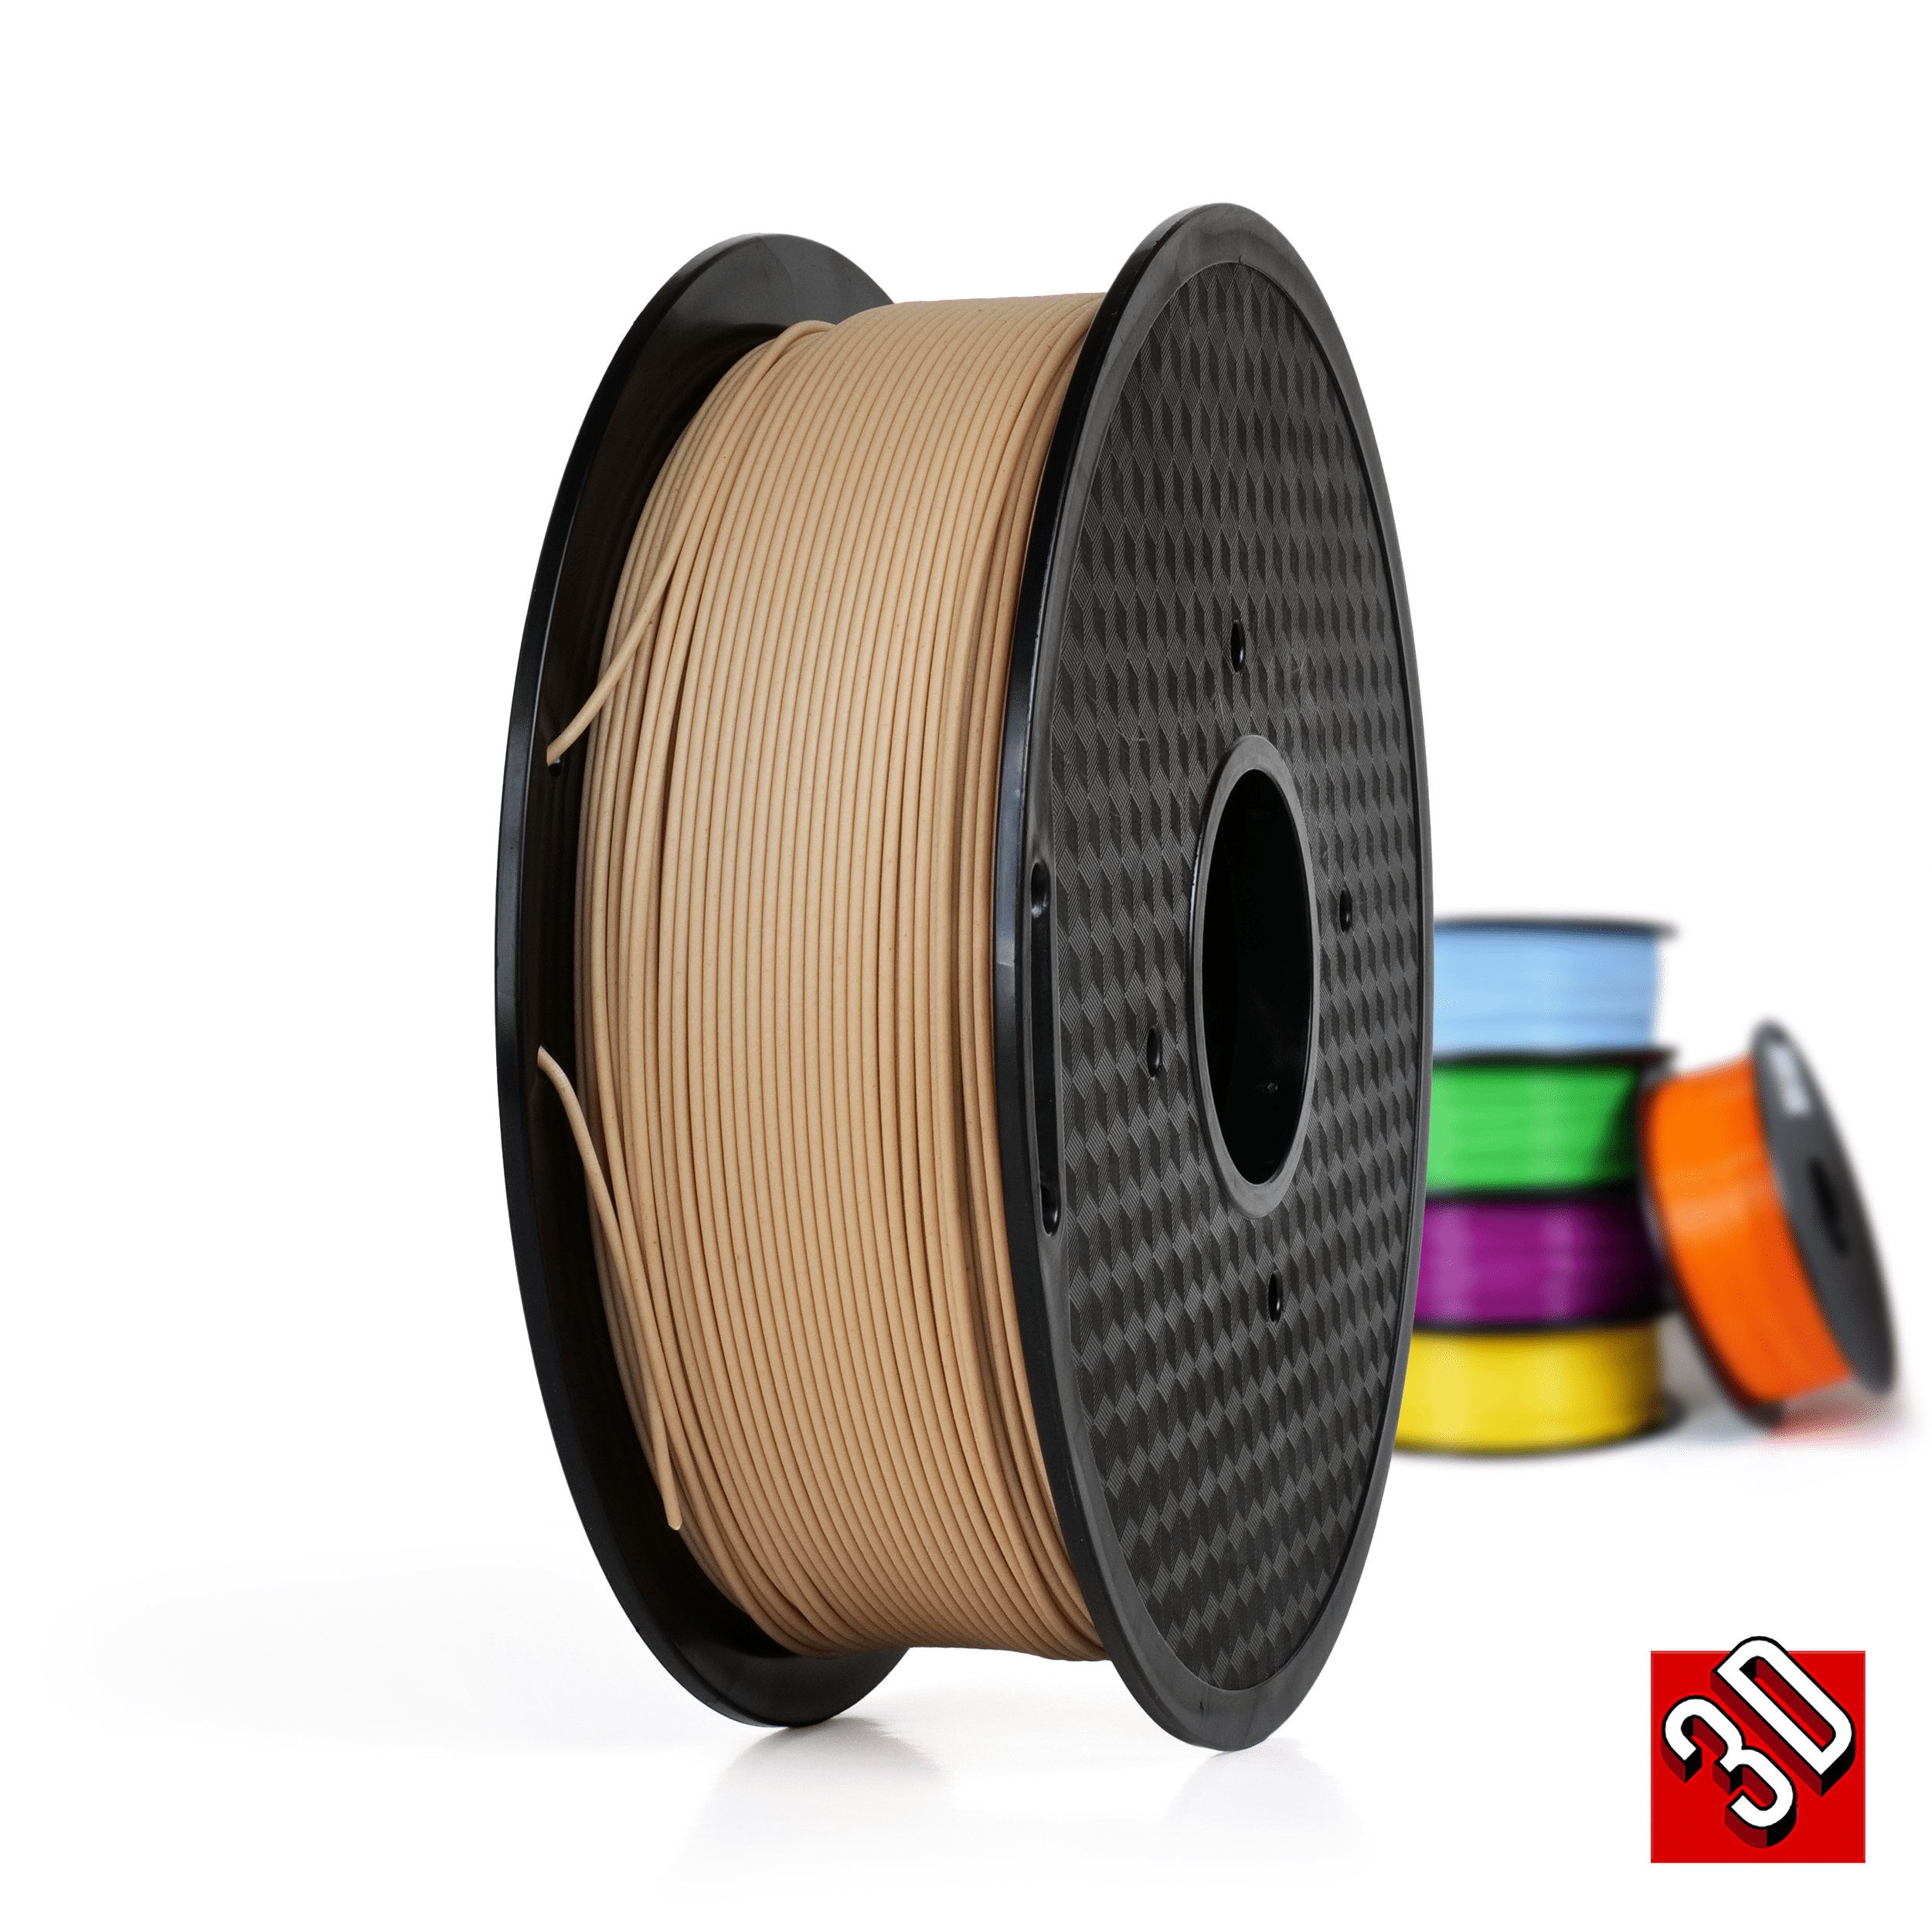 Filament d'imprimante 3D Impression 3D Filament Bois, 1.75mmWOOD